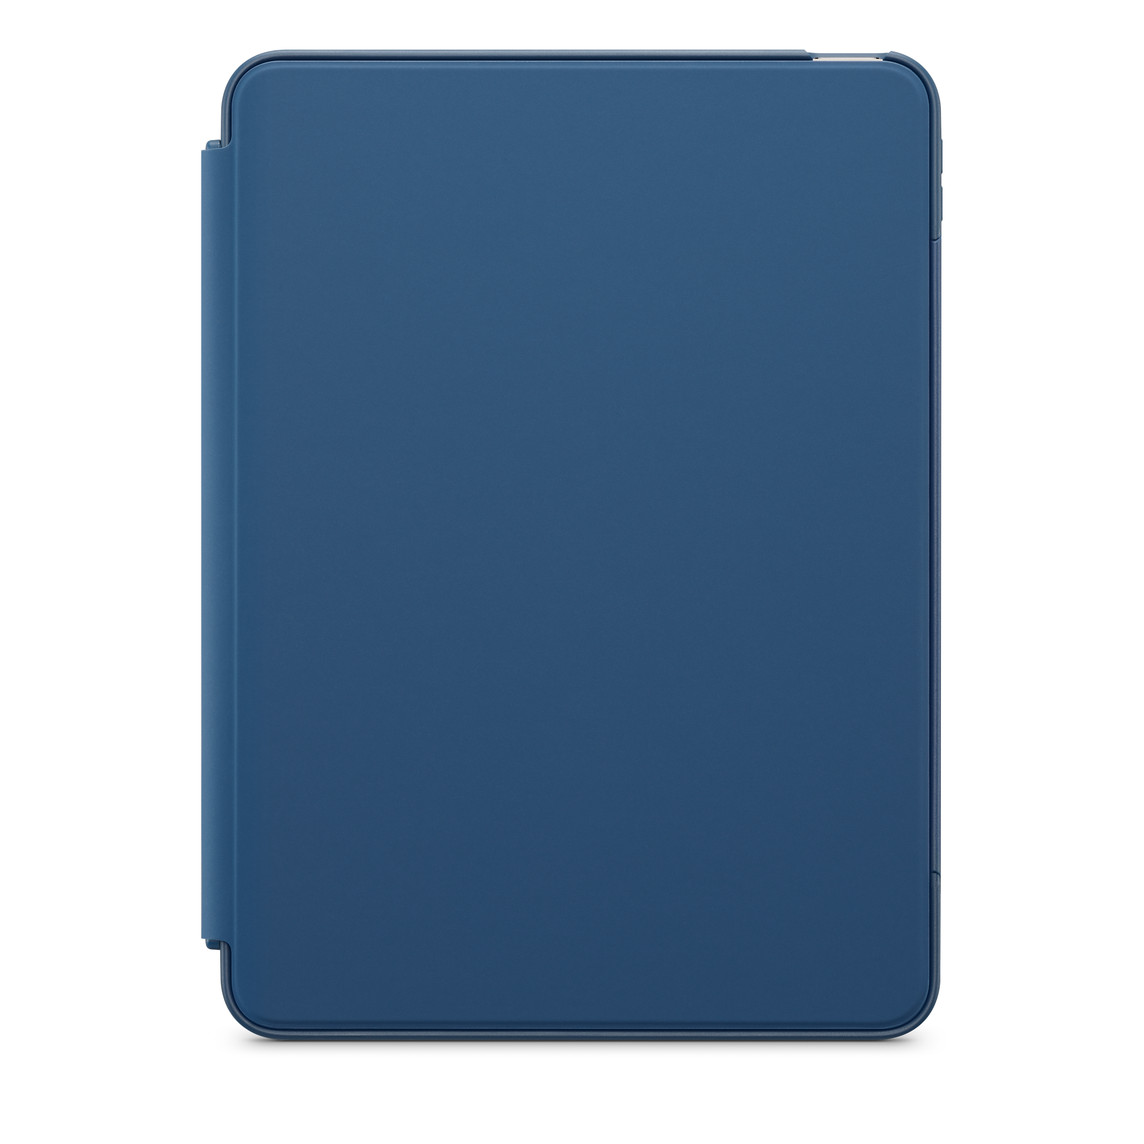 Vista frontal de la funda del iPad Air cerrada